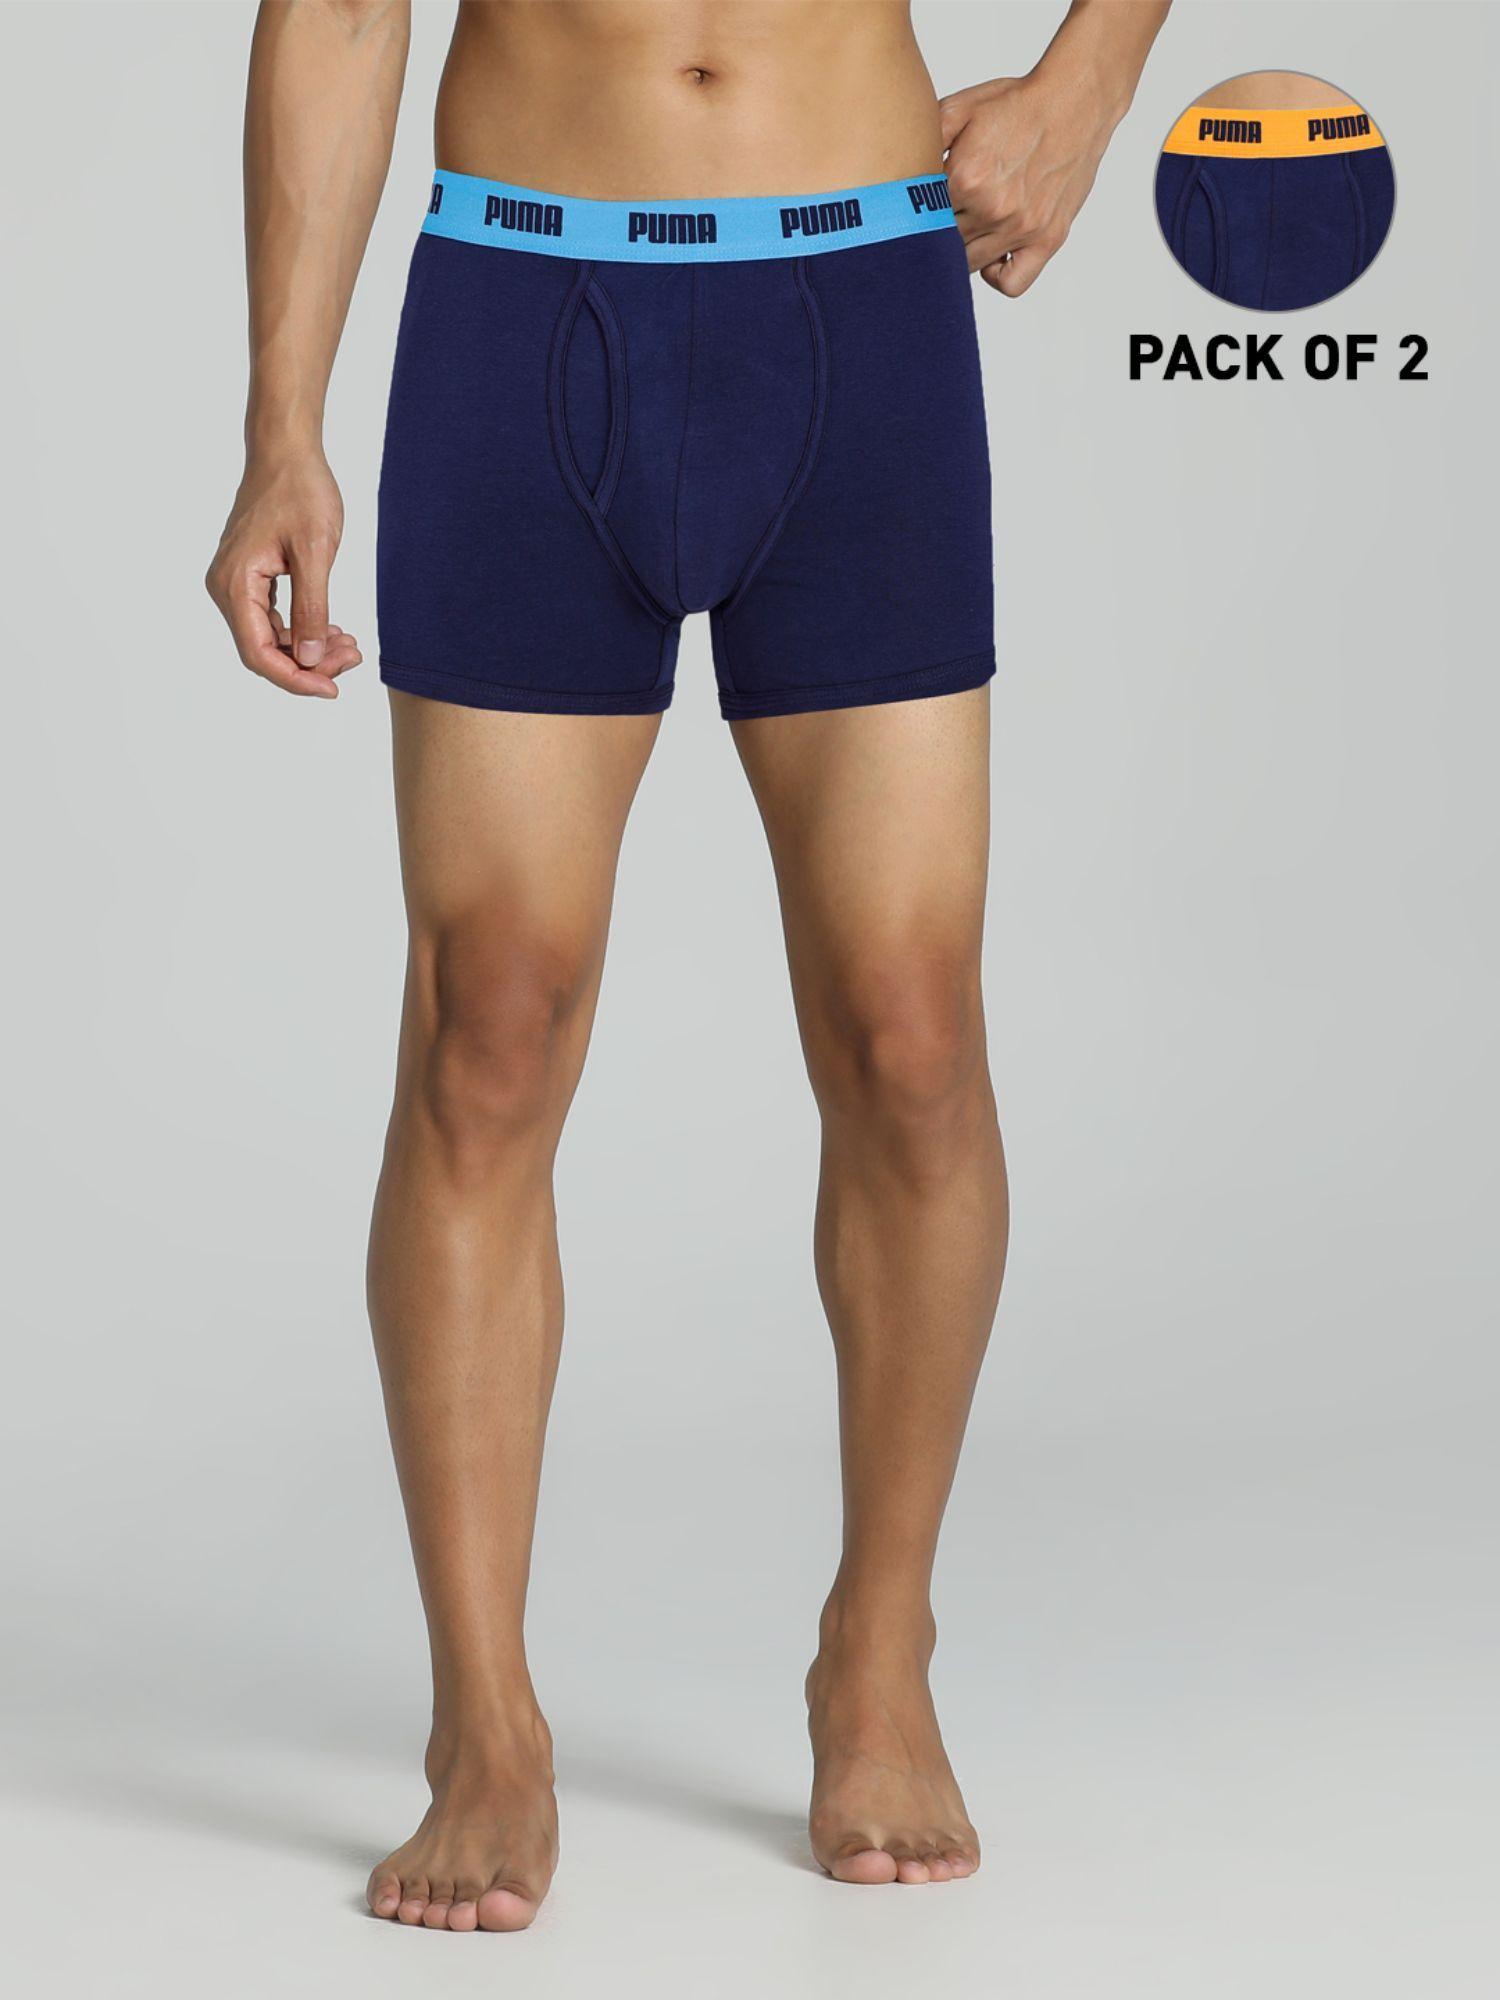 stretch-elastic-waistband-mens-blue-trunks-(pack-of-2)